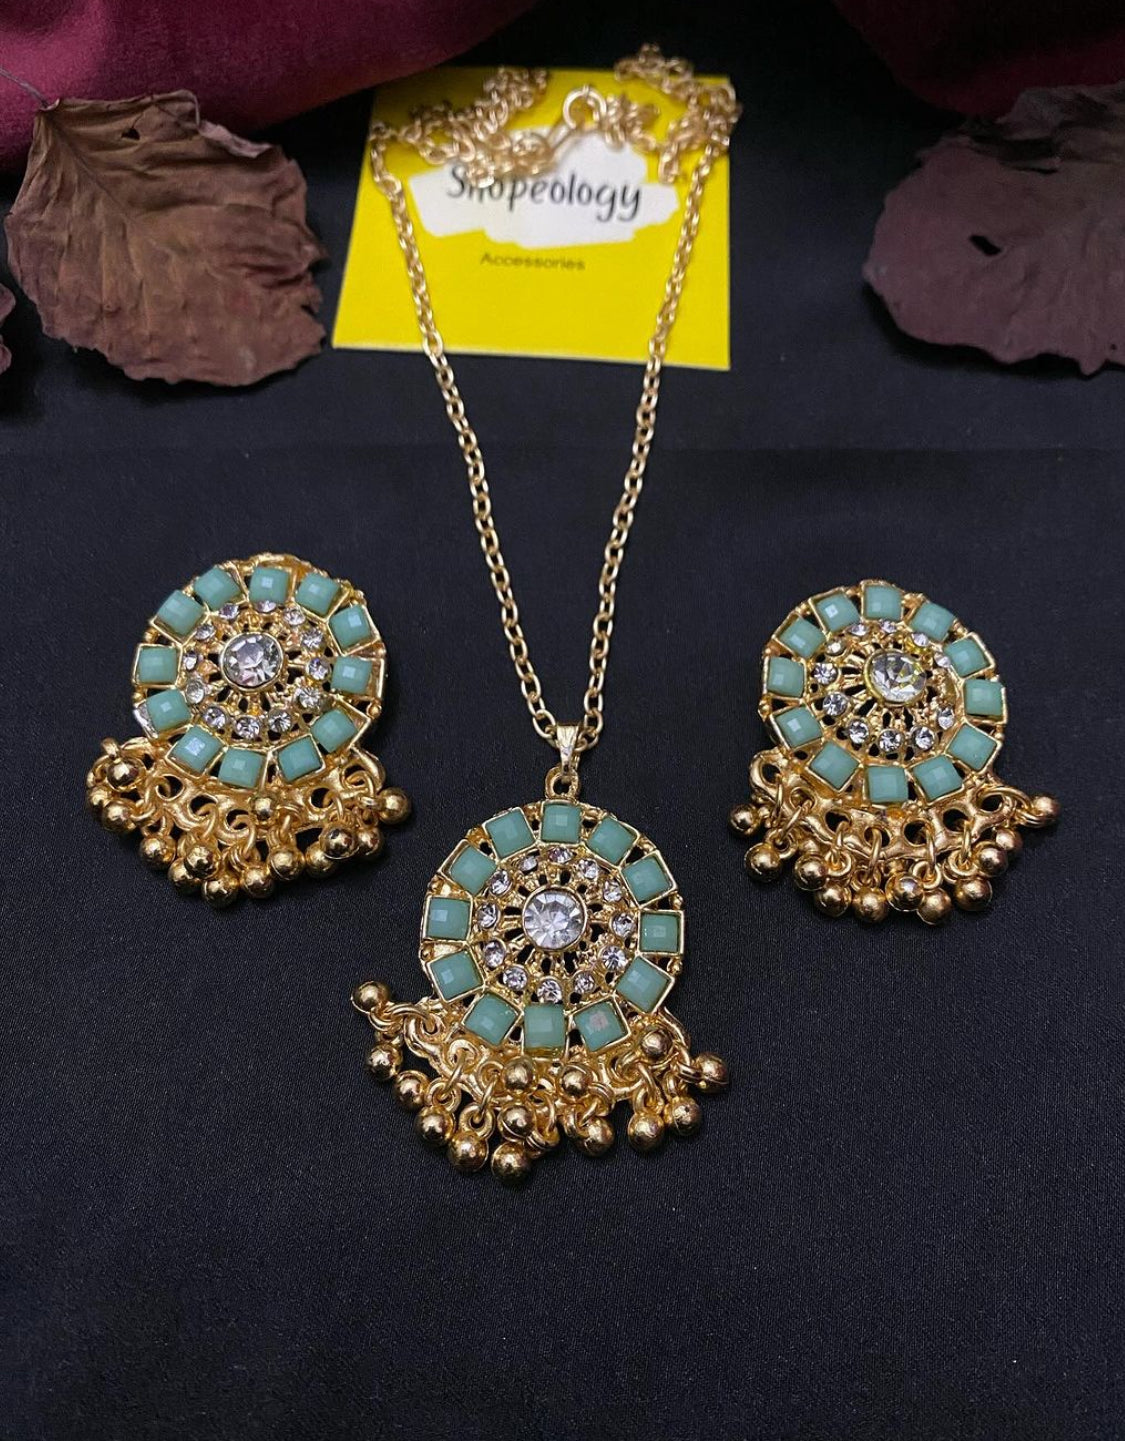 Gulnoor necklace set - Shopeology